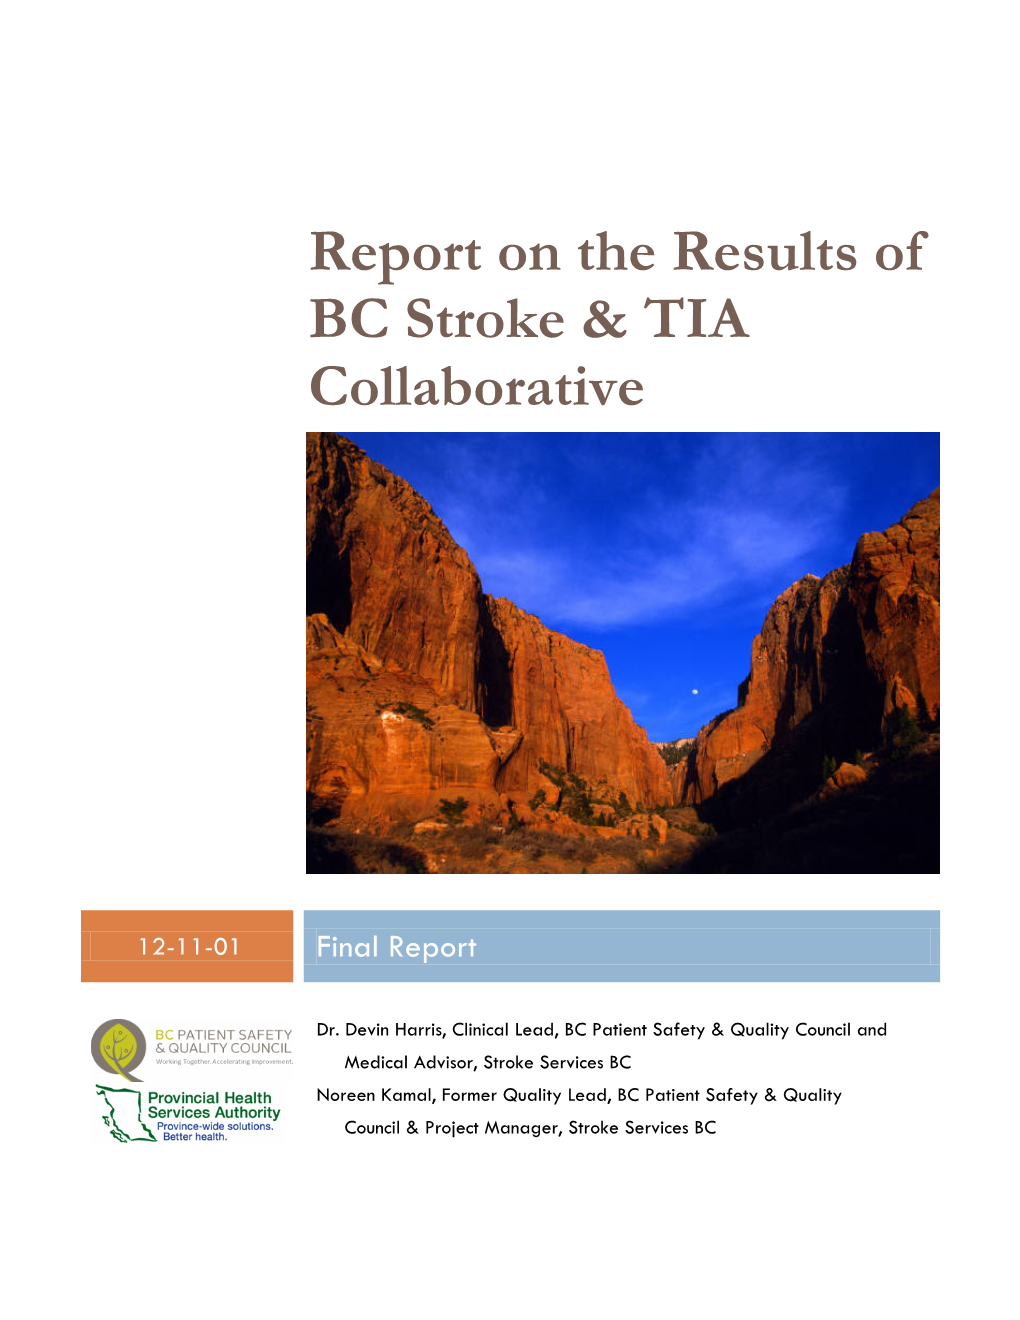 Report on the Results of BC Stroke & TIA Collaborative